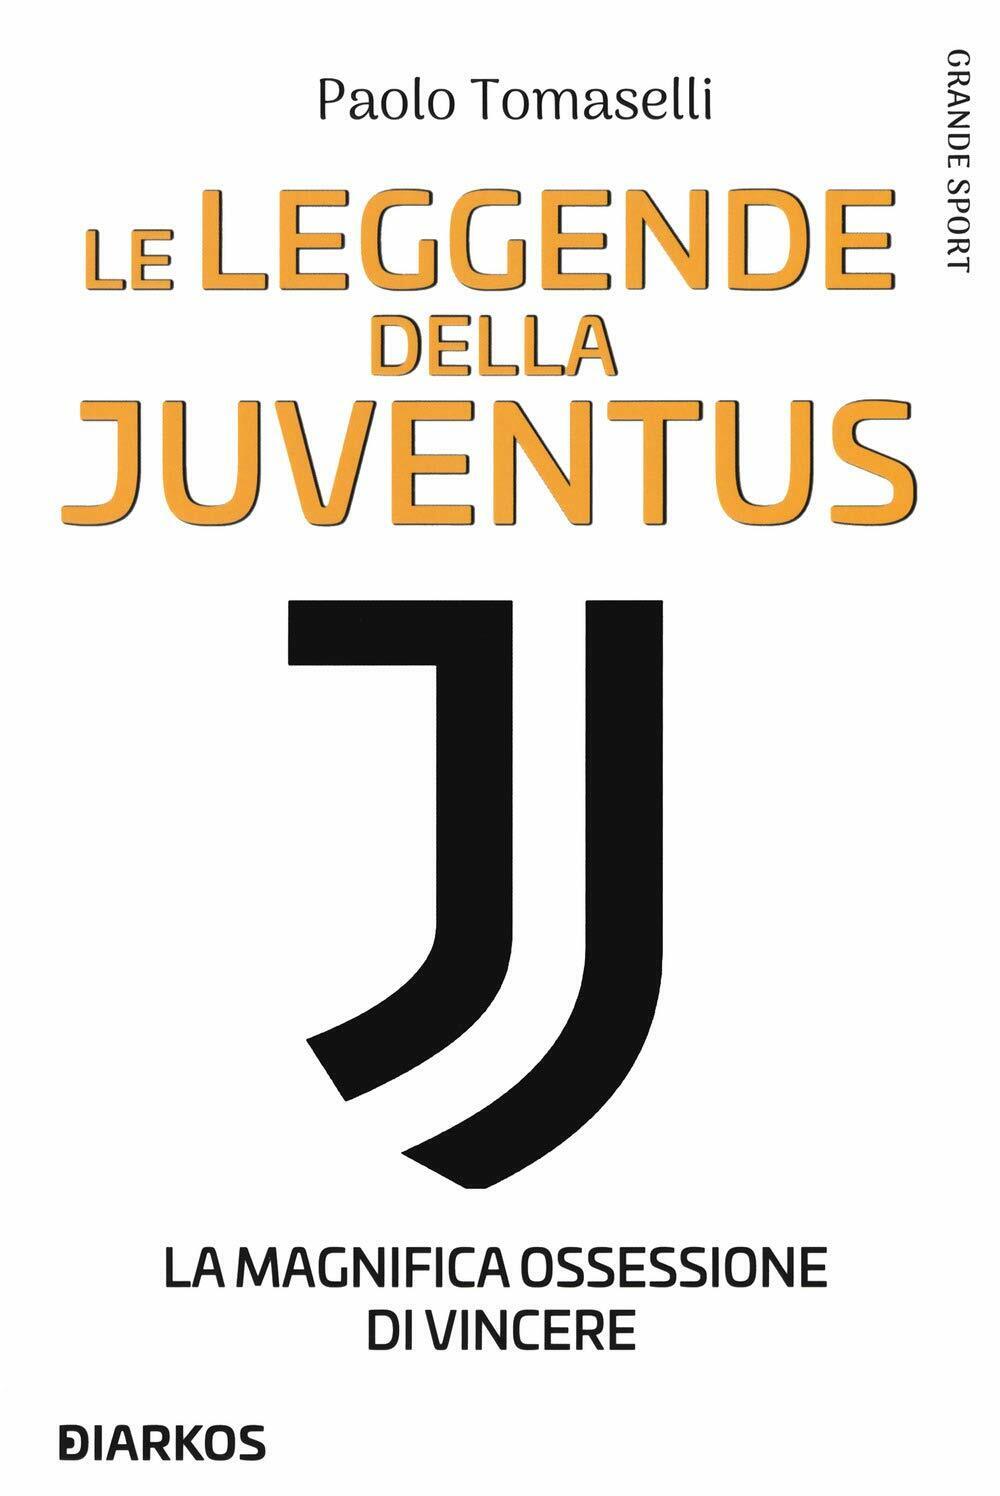 Le leggende della Juventus - Paolo Tomaselli - Diarkos, 2020